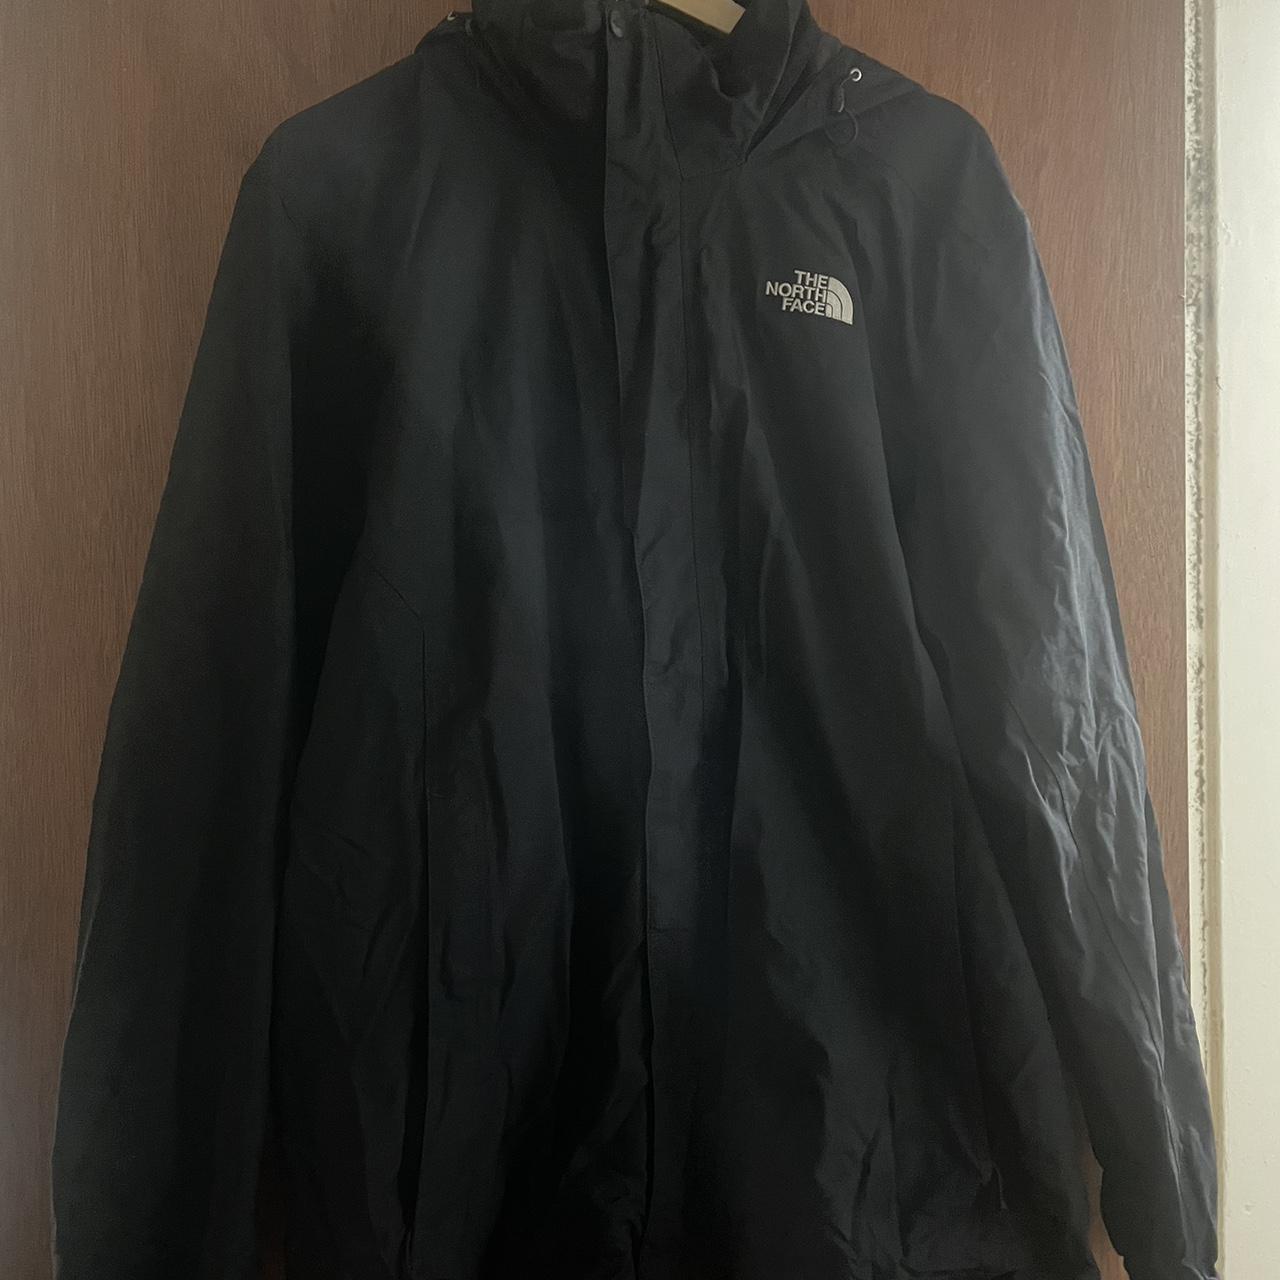 North Face windbreaker jacket - Depop